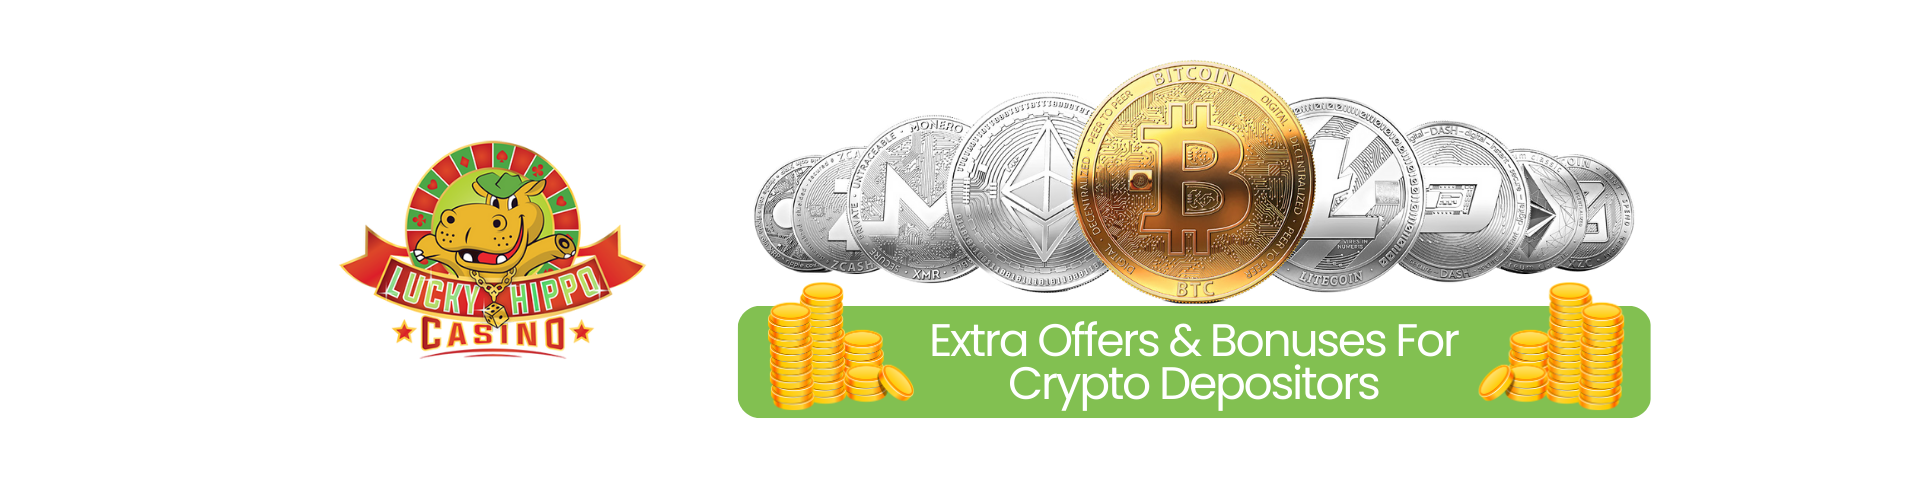 Lucky Hippo Casino - Extra Offers & Bonuses For Crypto Depositors